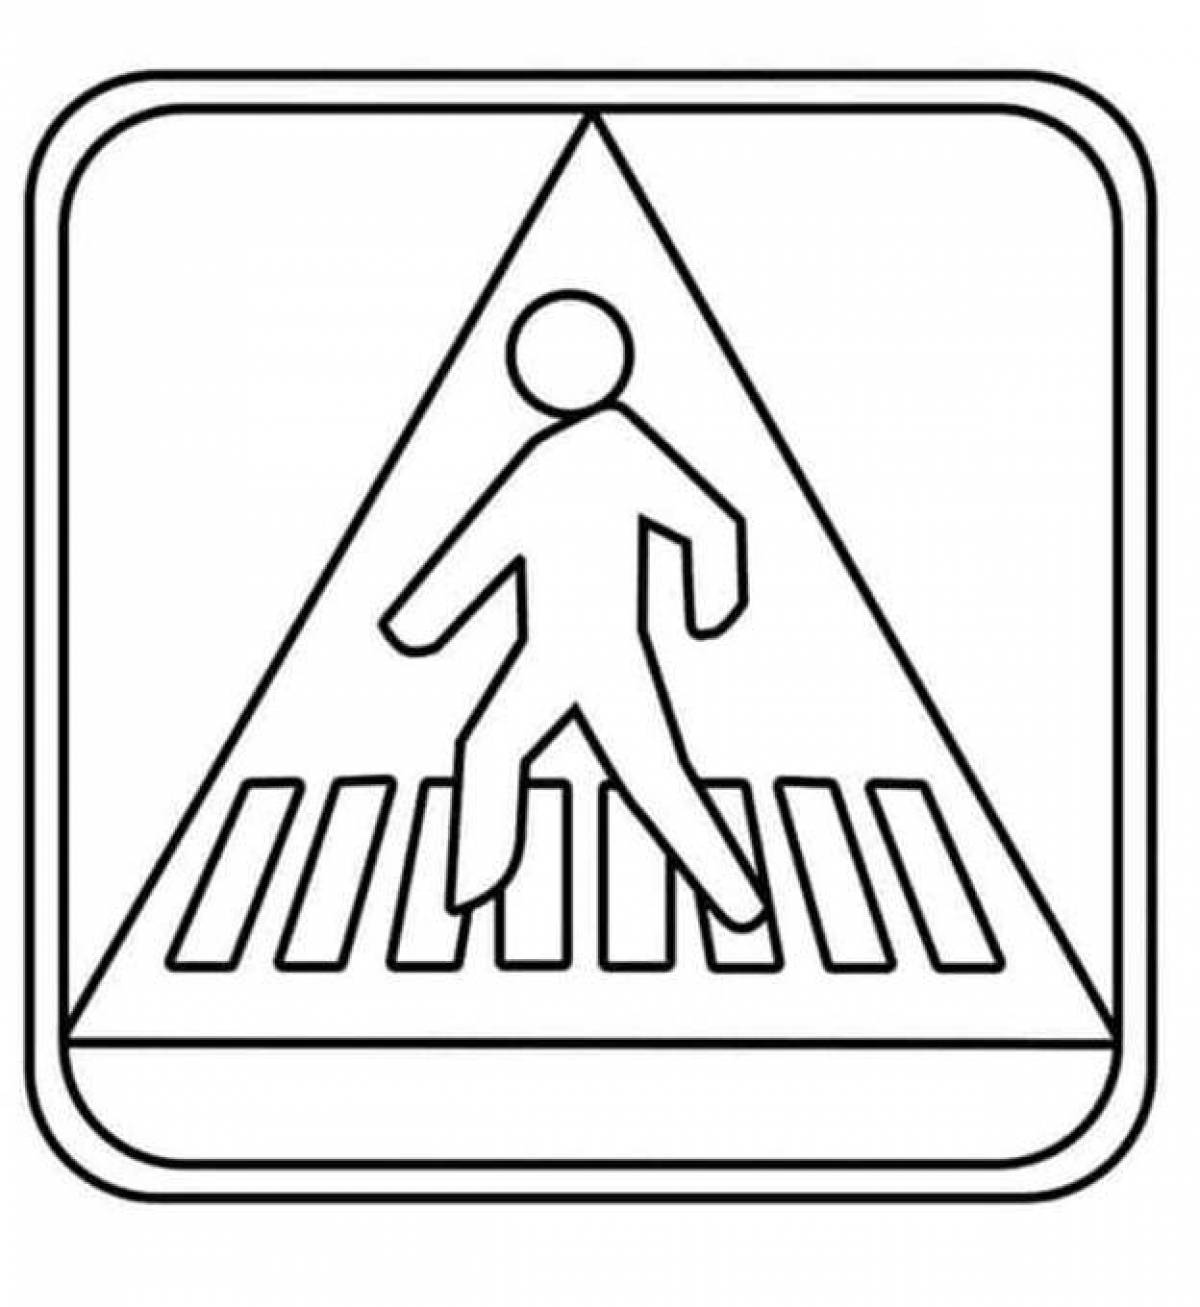 Crossing sign for children #15